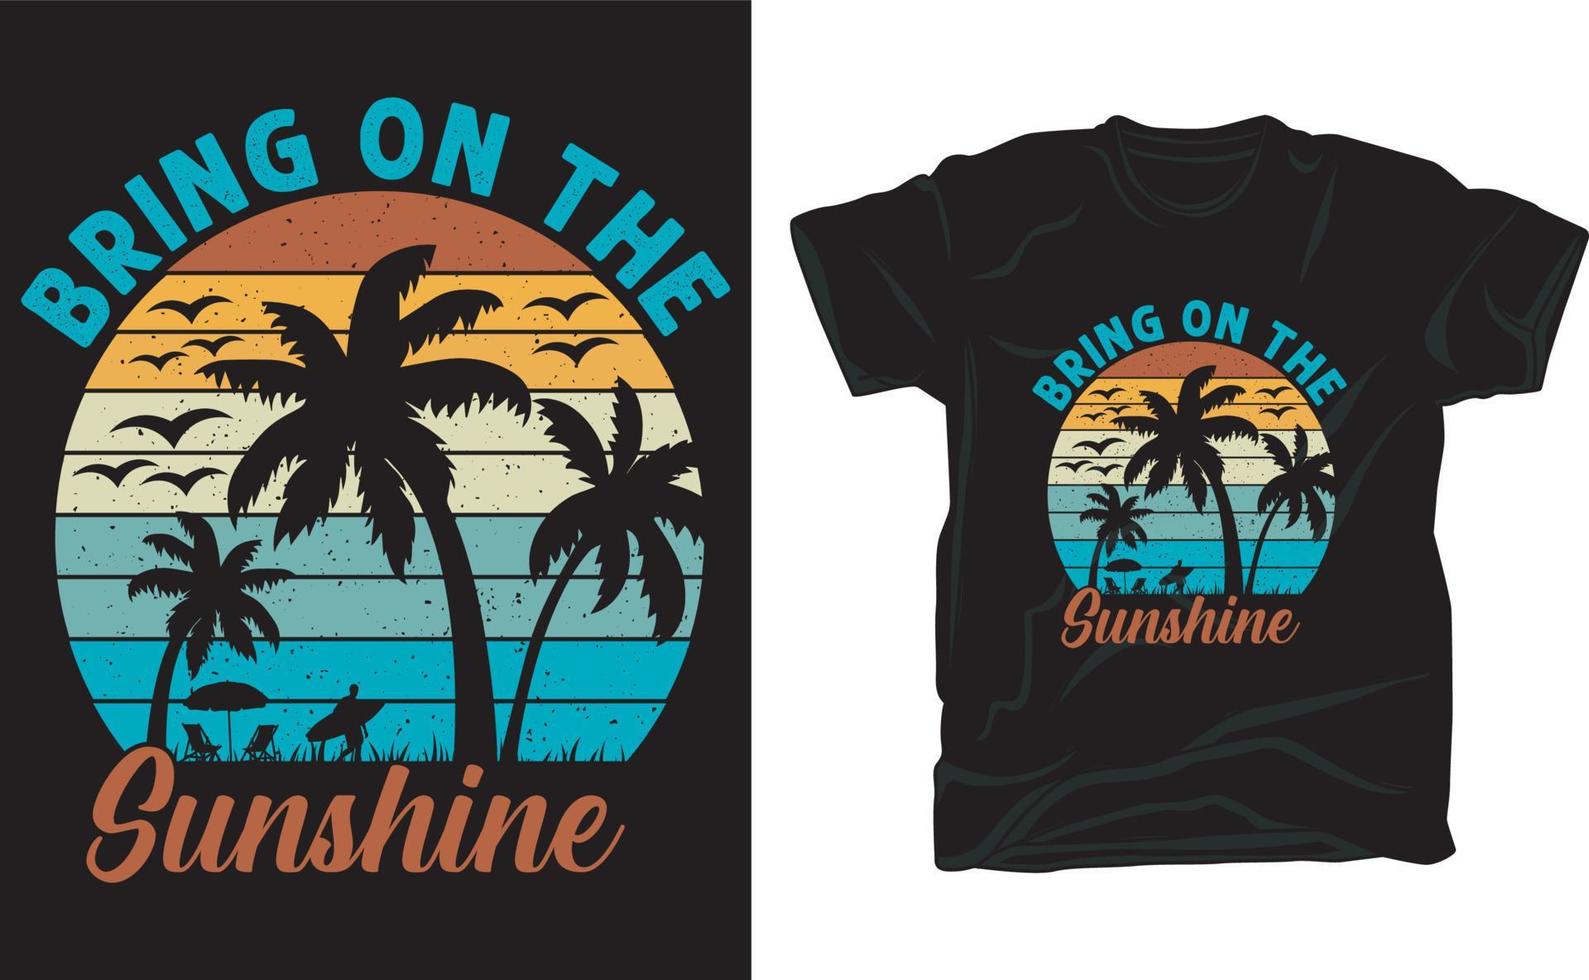 Bring on the sunshine t shirt design vector